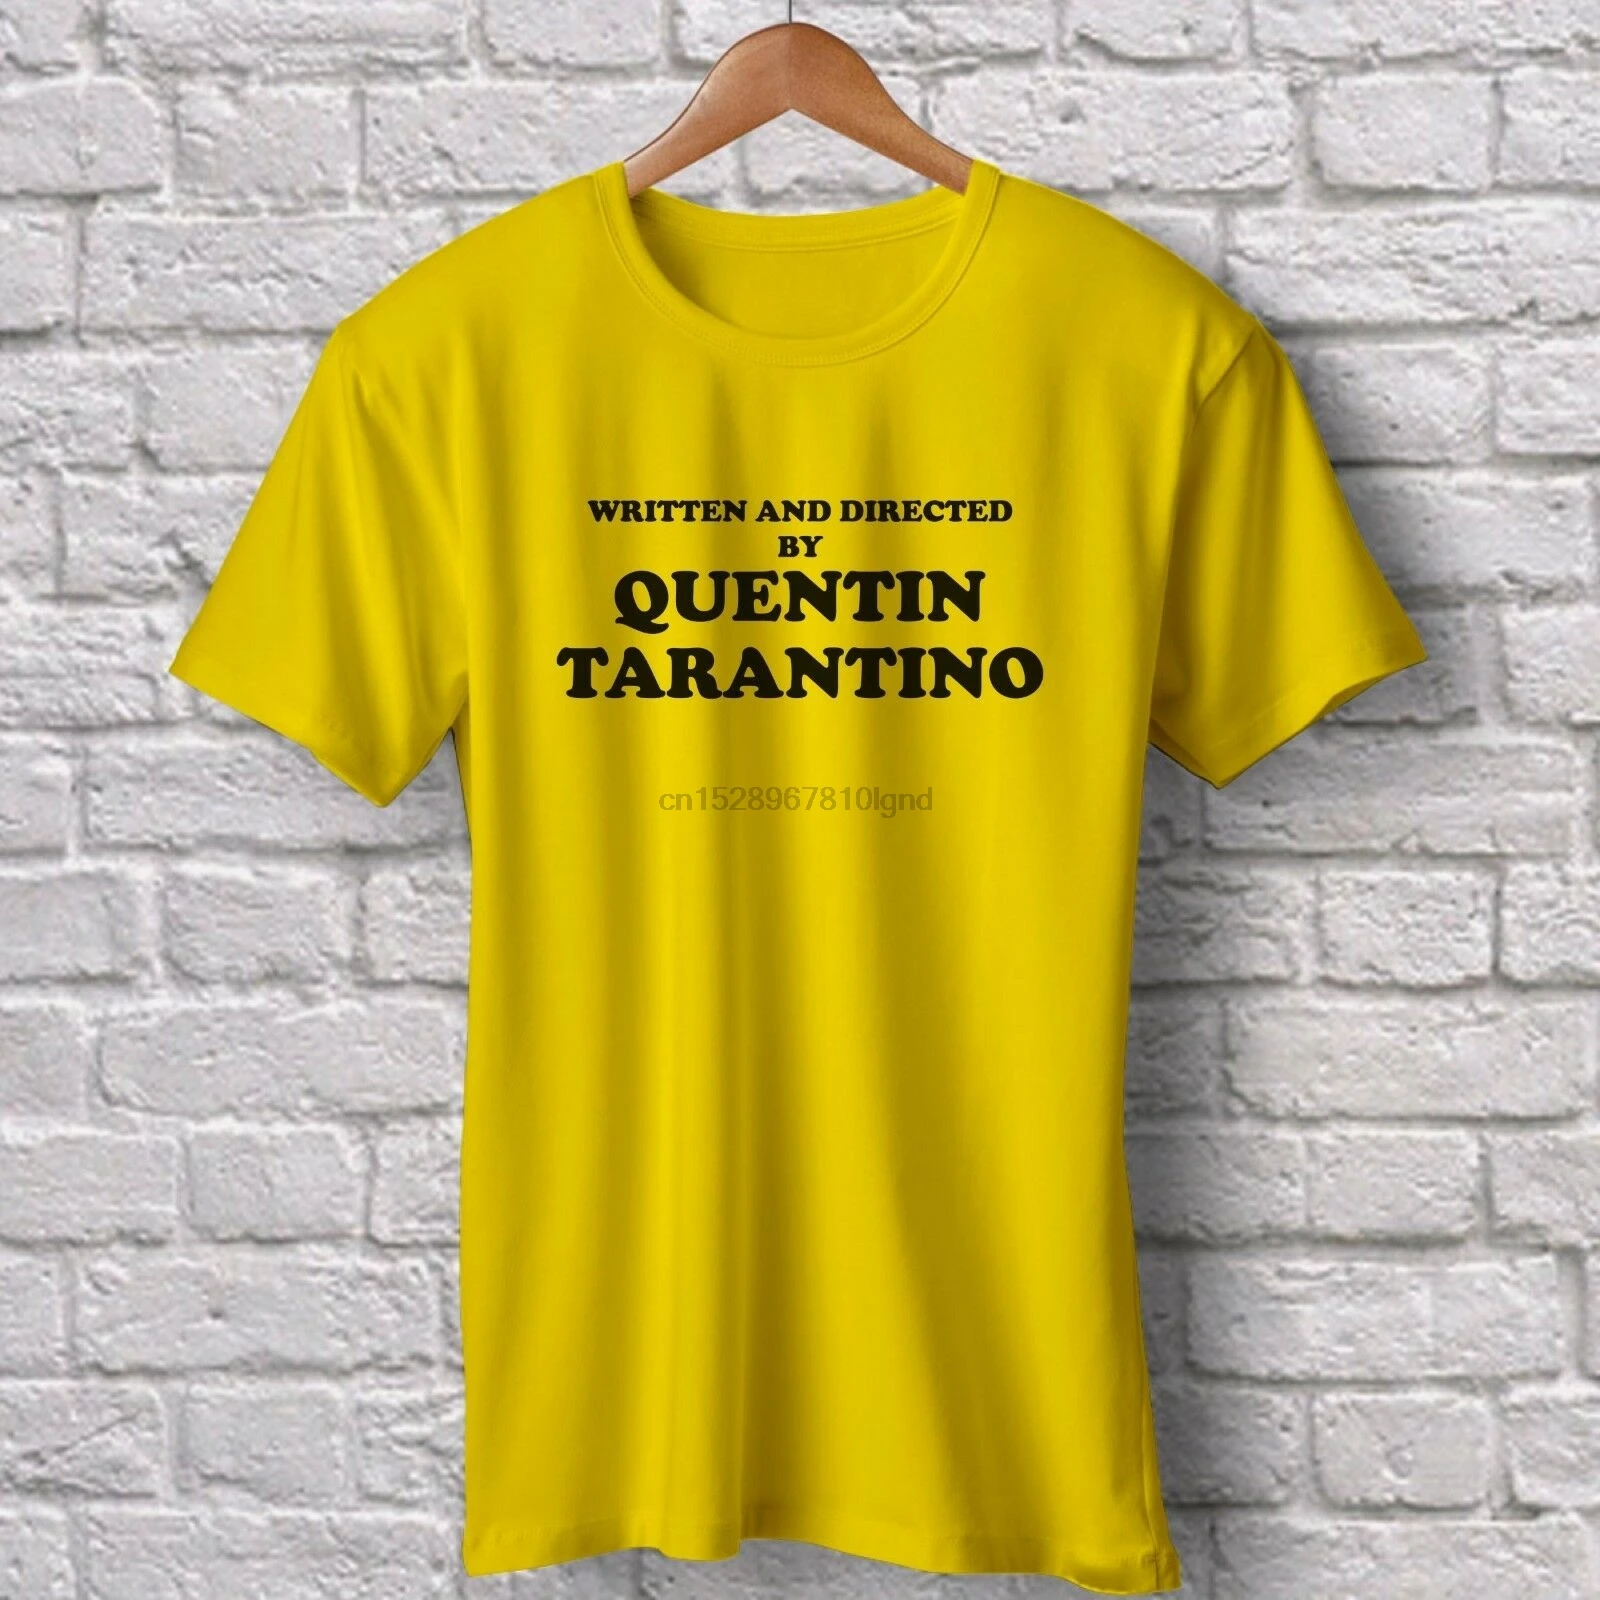 Quentin tarantino filme amarelo camiseta engraçado slogan pulp fiction  retro tv S 3XL moda camiseta camiseta topo|Camisetas| - AliExpress